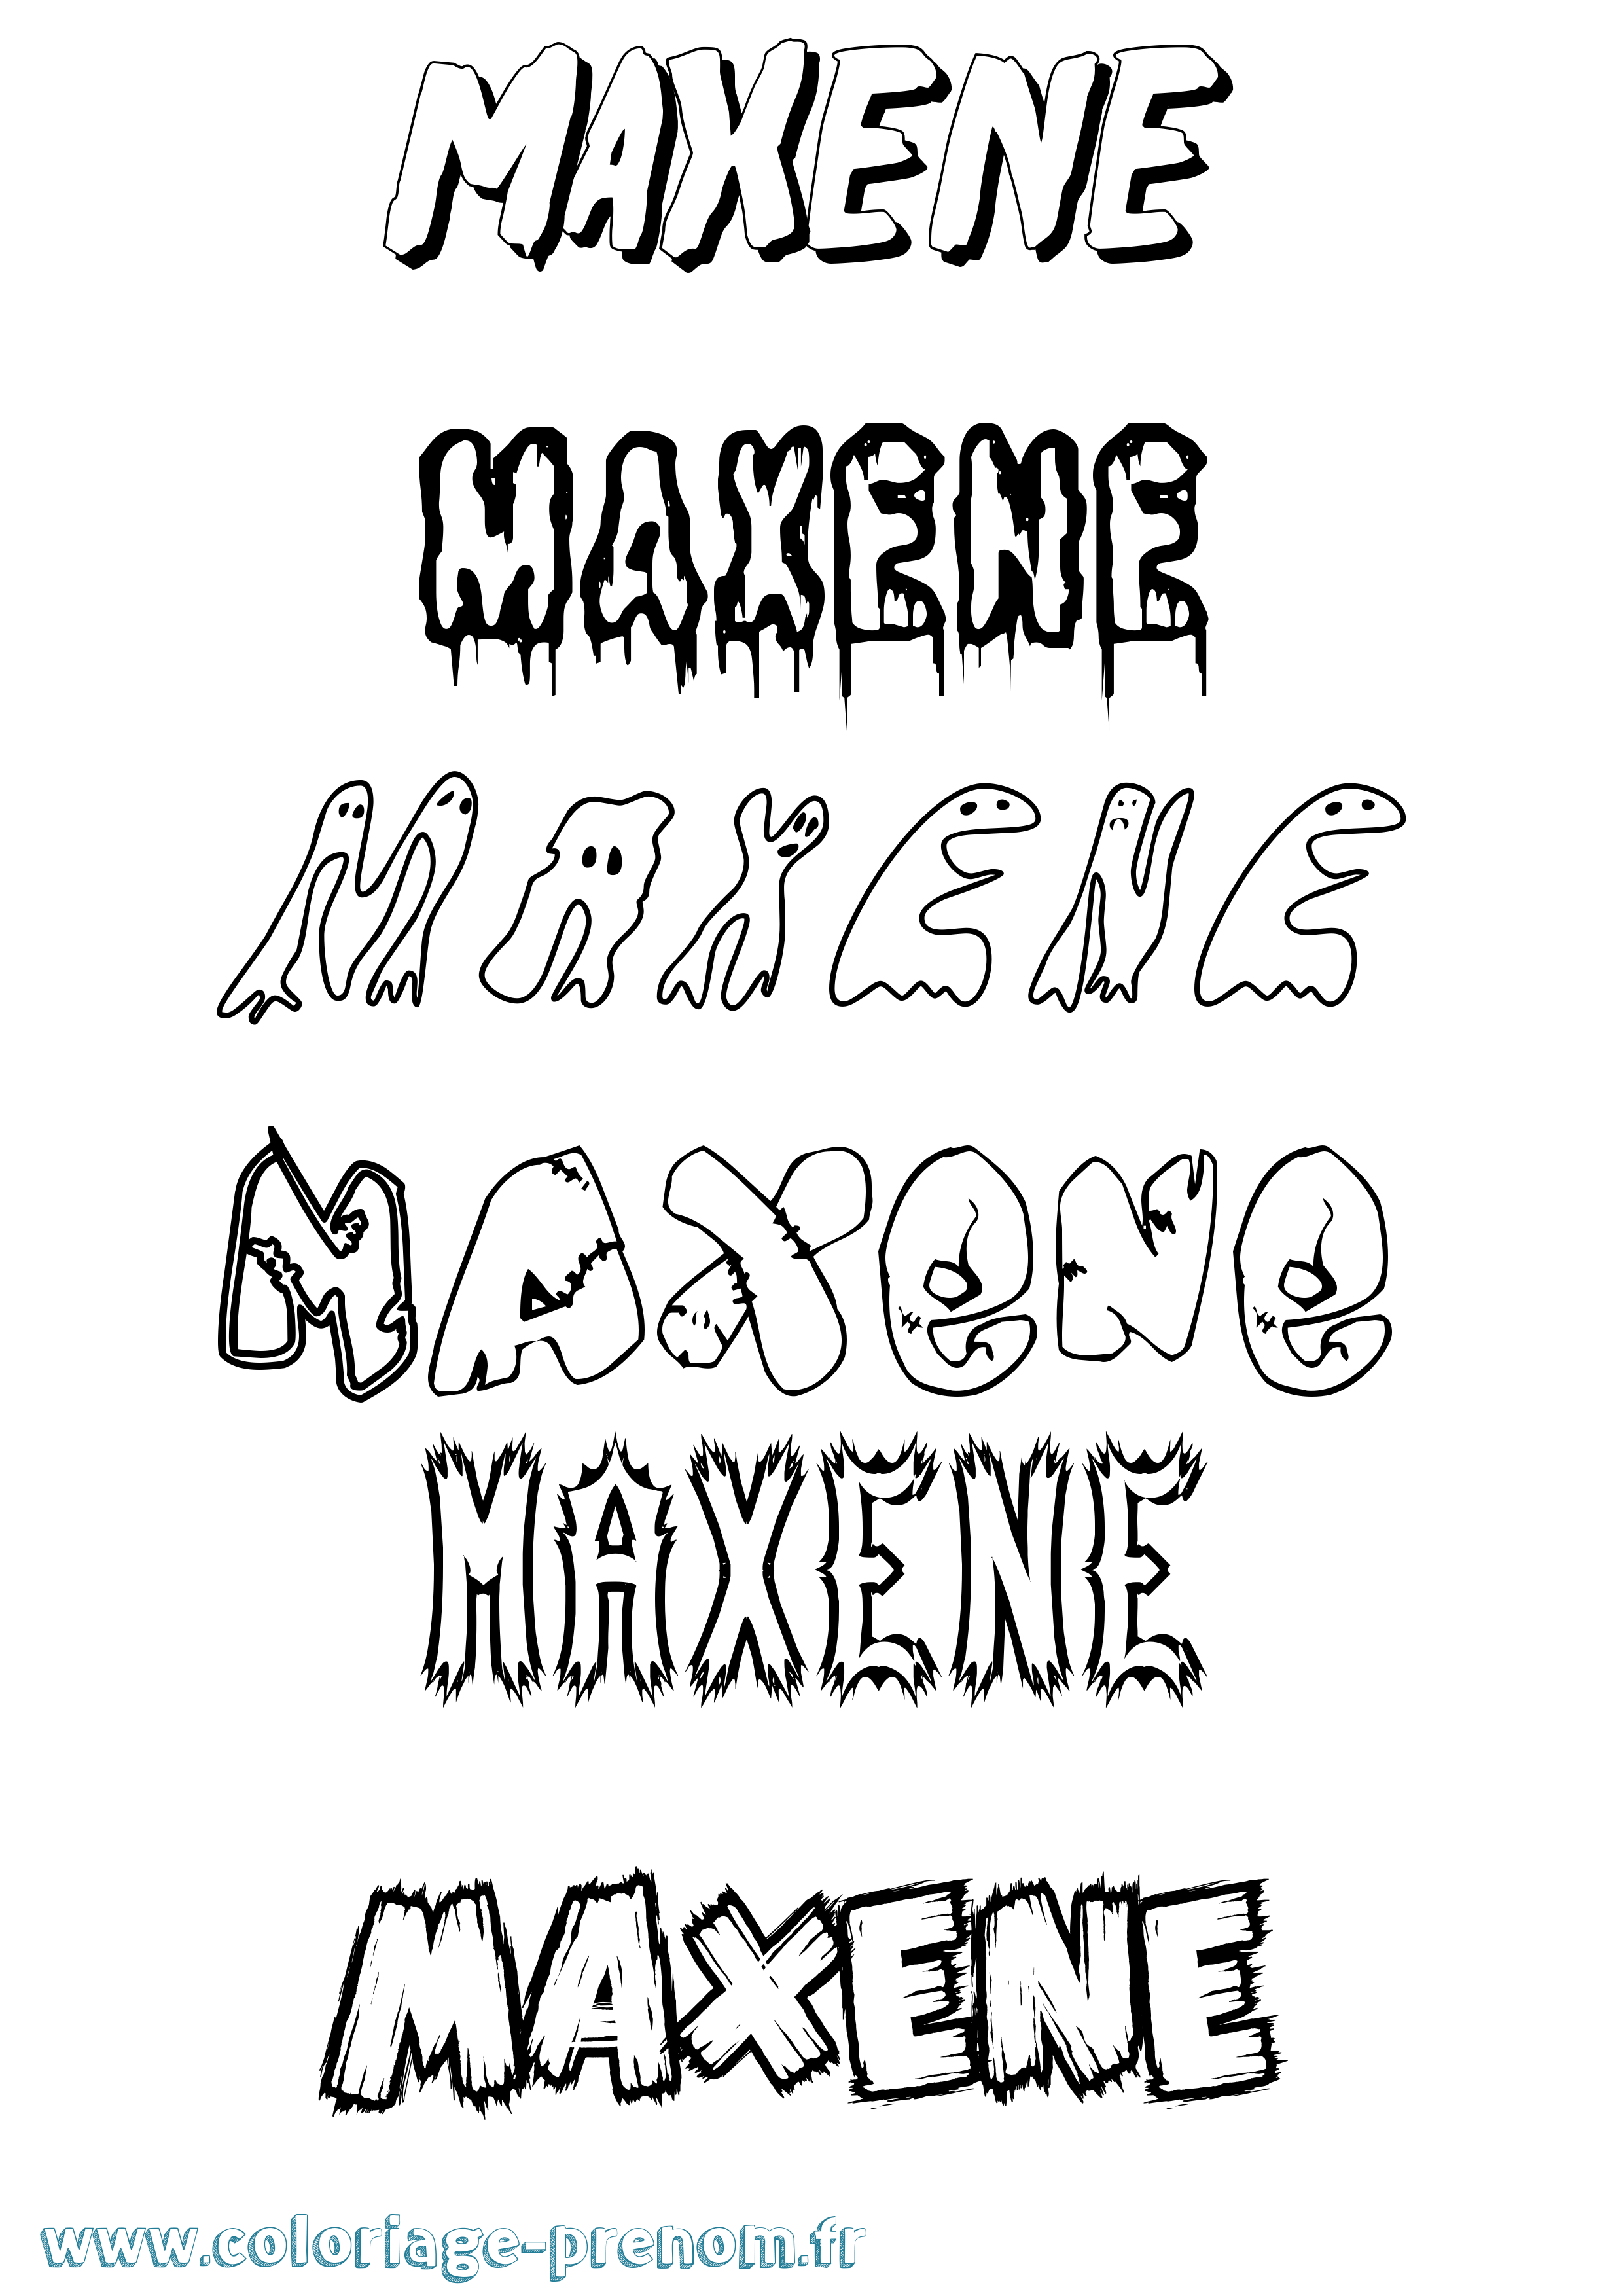 Coloriage prénom Maxene Frisson